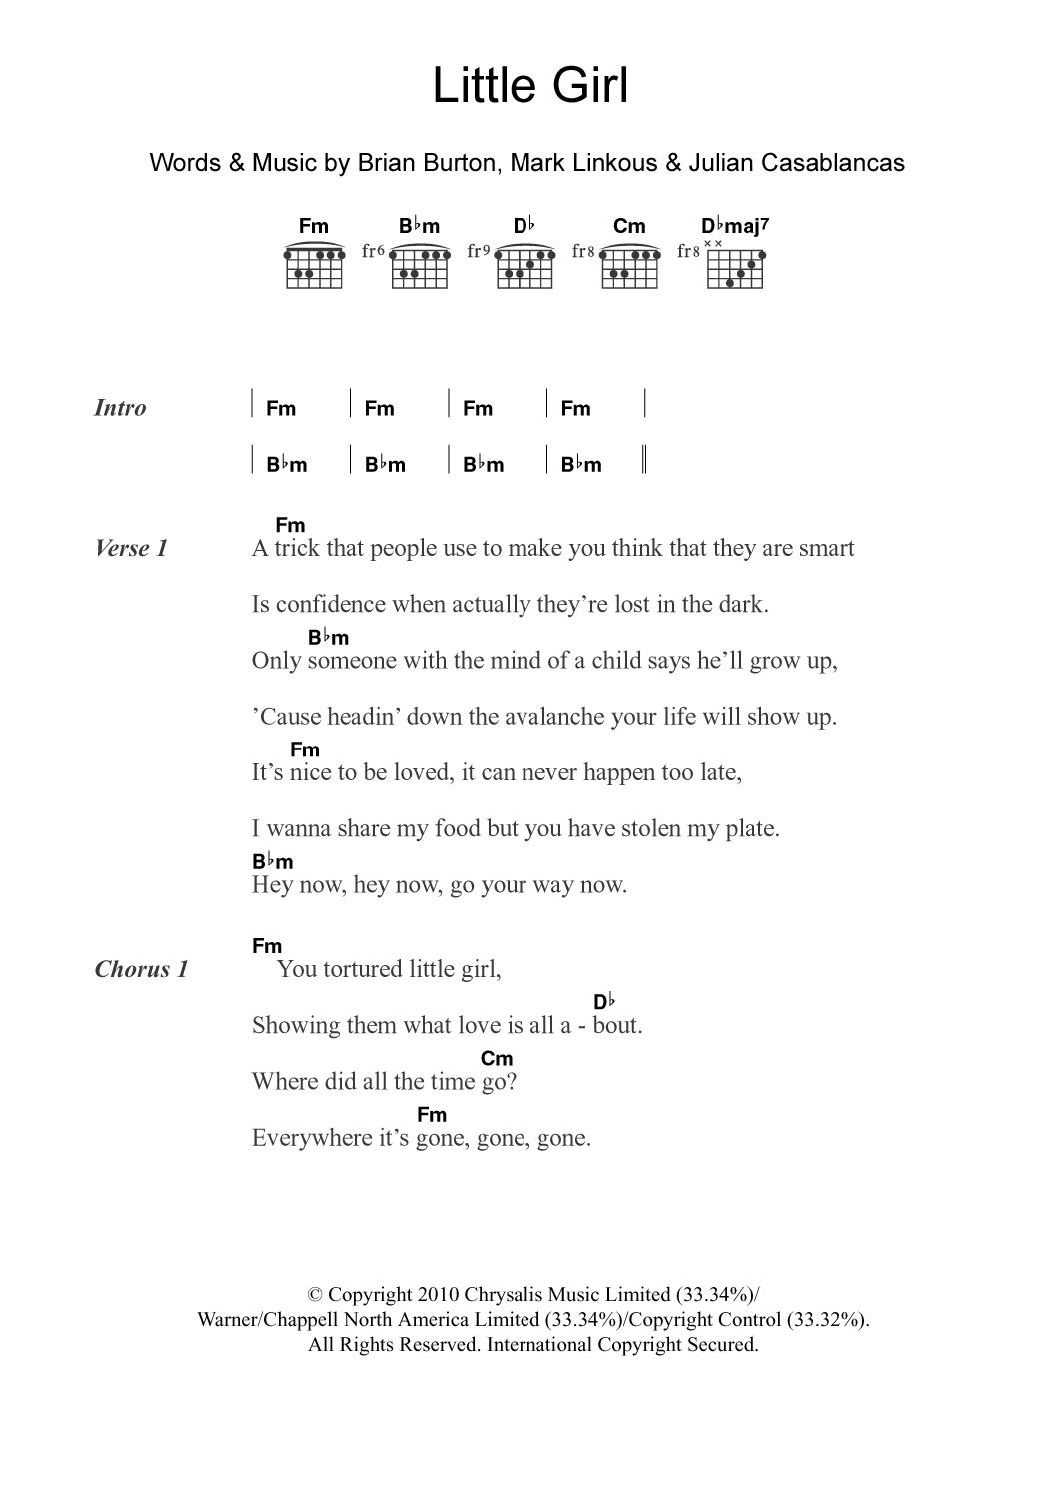 Danger Mouse Little Girl (featuring Julian Casablancas) Sheet Music Notes & Chords for Guitar Chords/Lyrics - Download or Print PDF